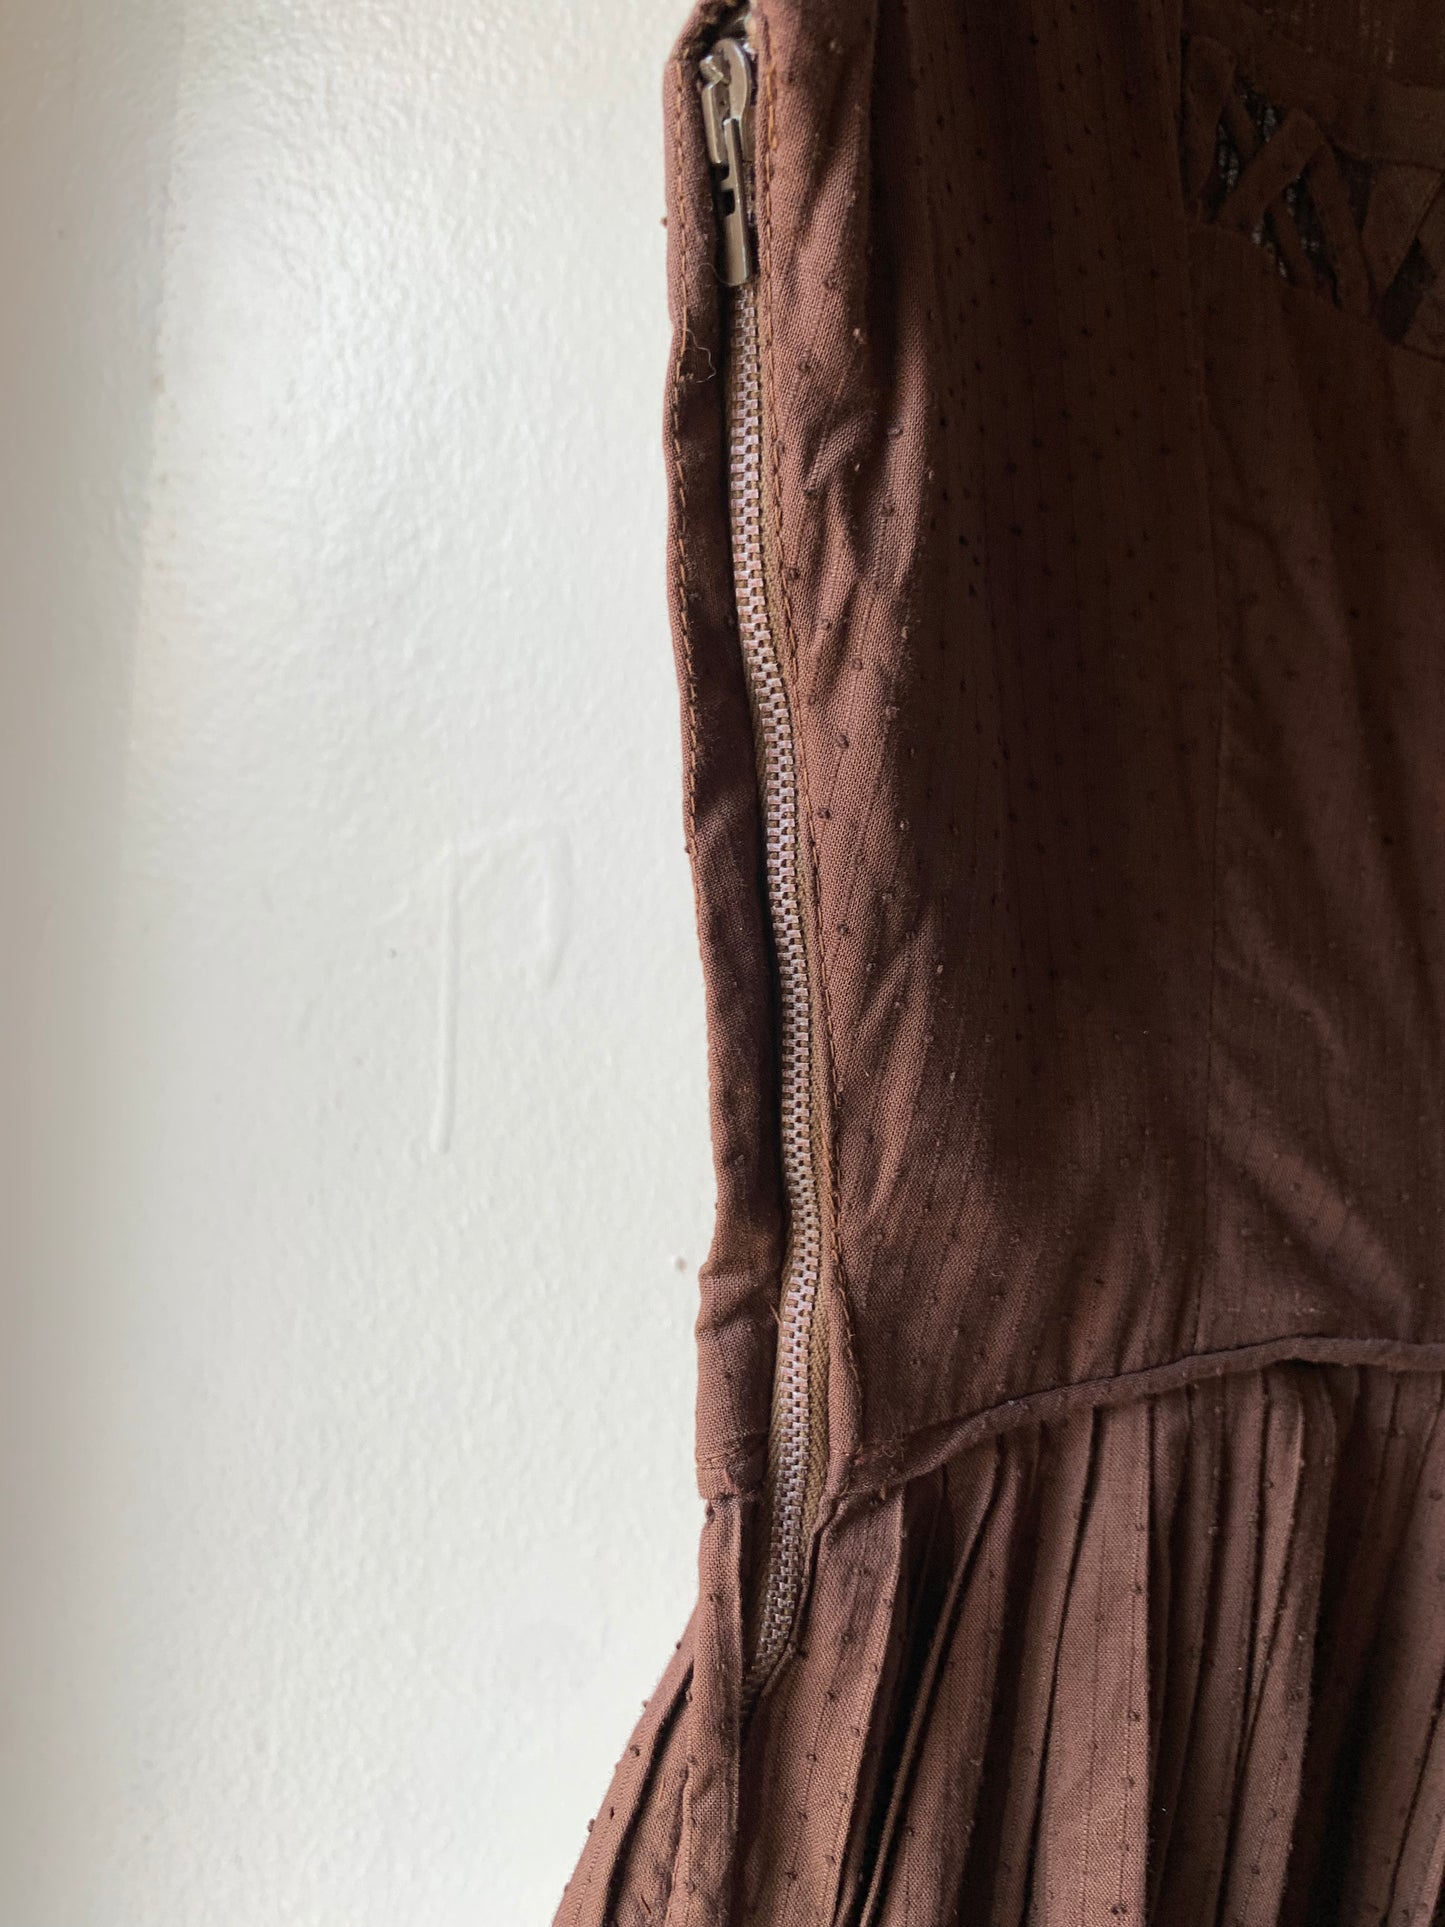 1950s Chocolate Brown Square Dance Dress (XS)